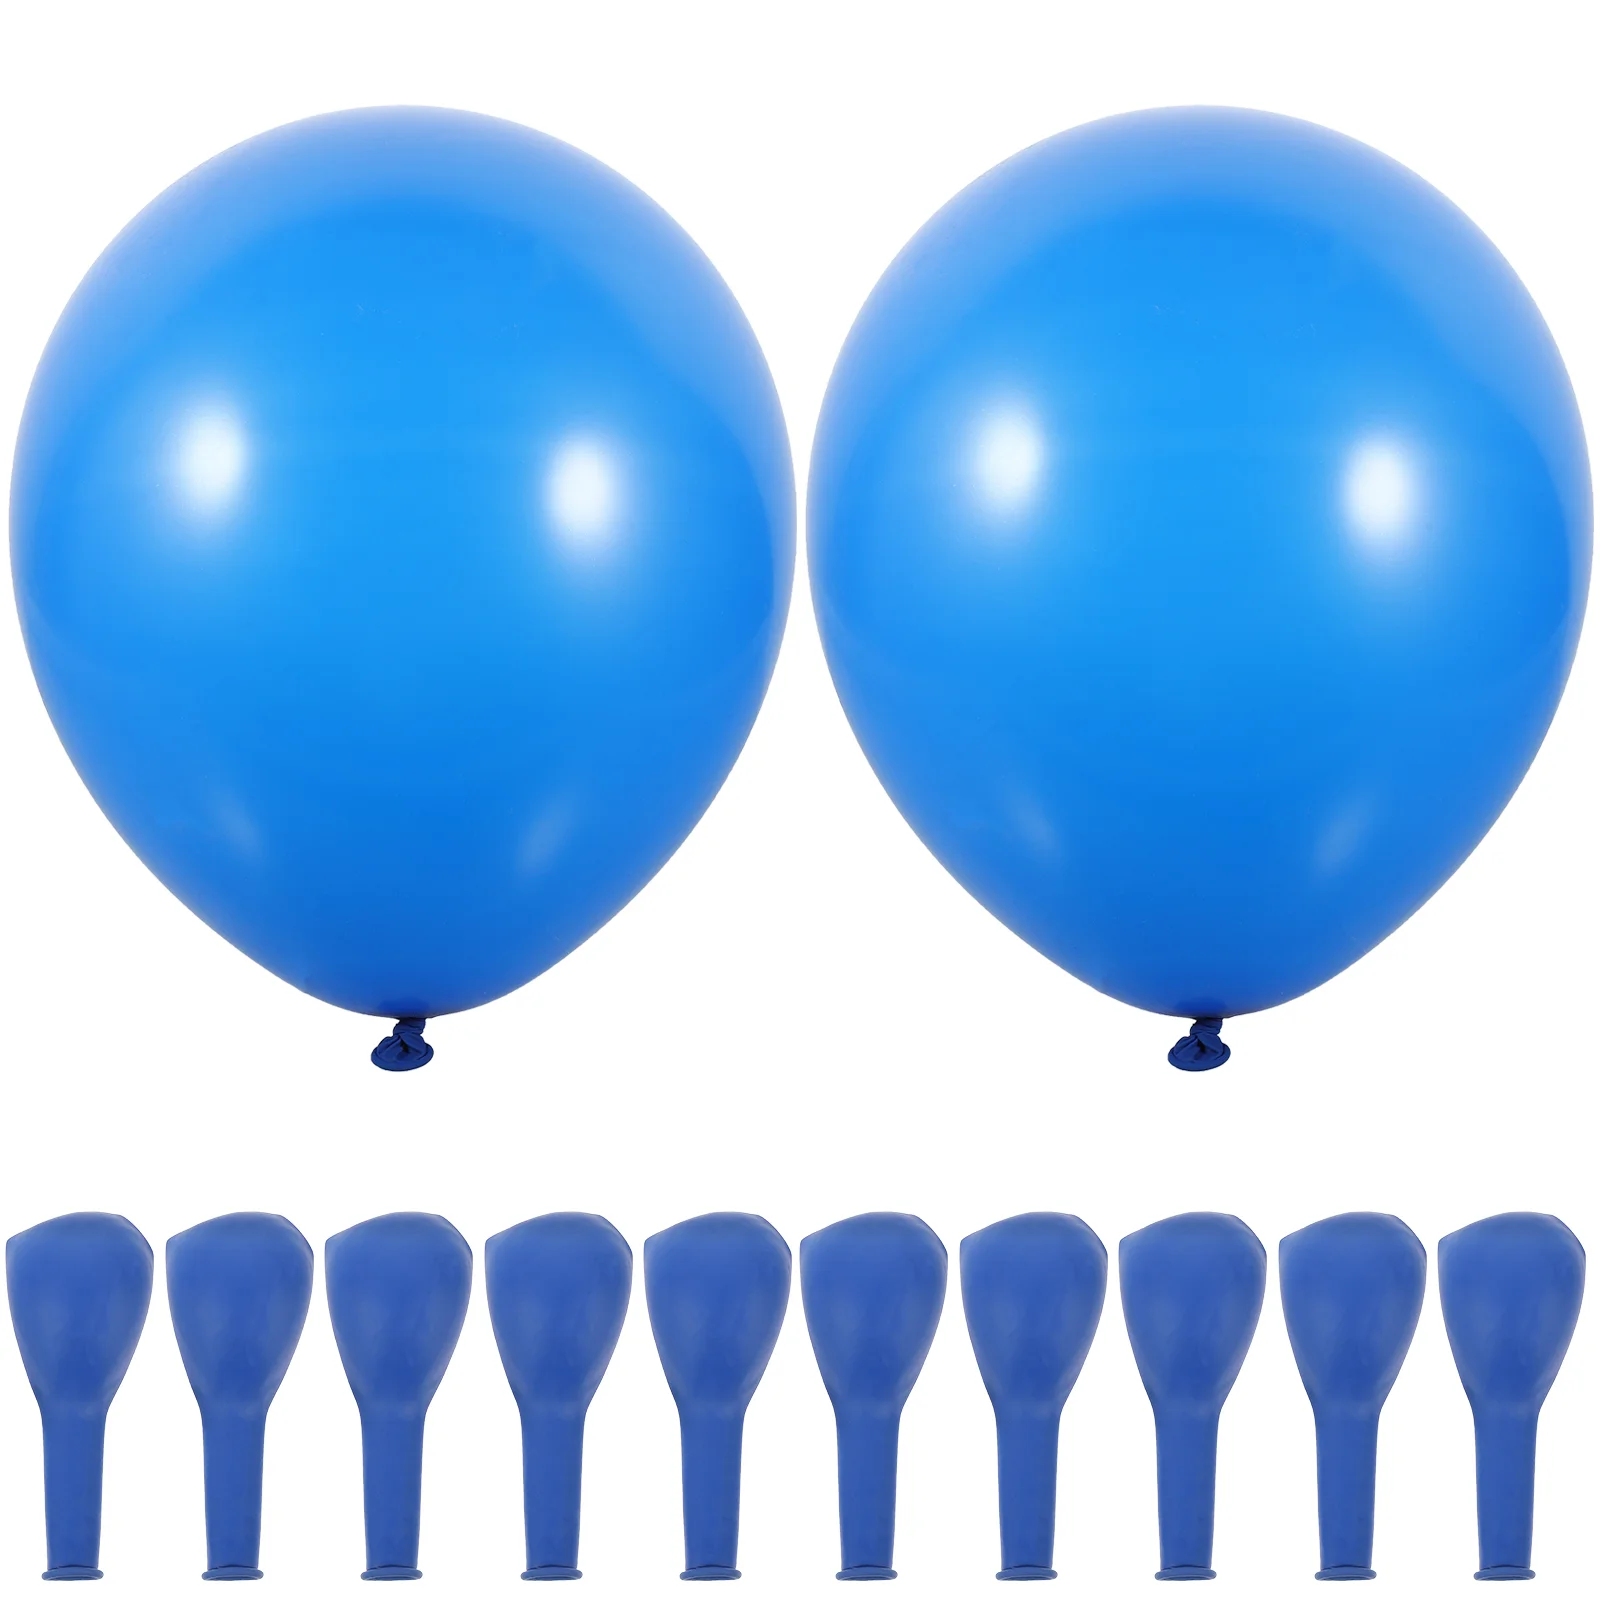 

50 Pcs Royal Blue Latex Balloon Festival Balloons Wedding Kit Decorations For Reception Valentines Day Birthday Party Cartoon